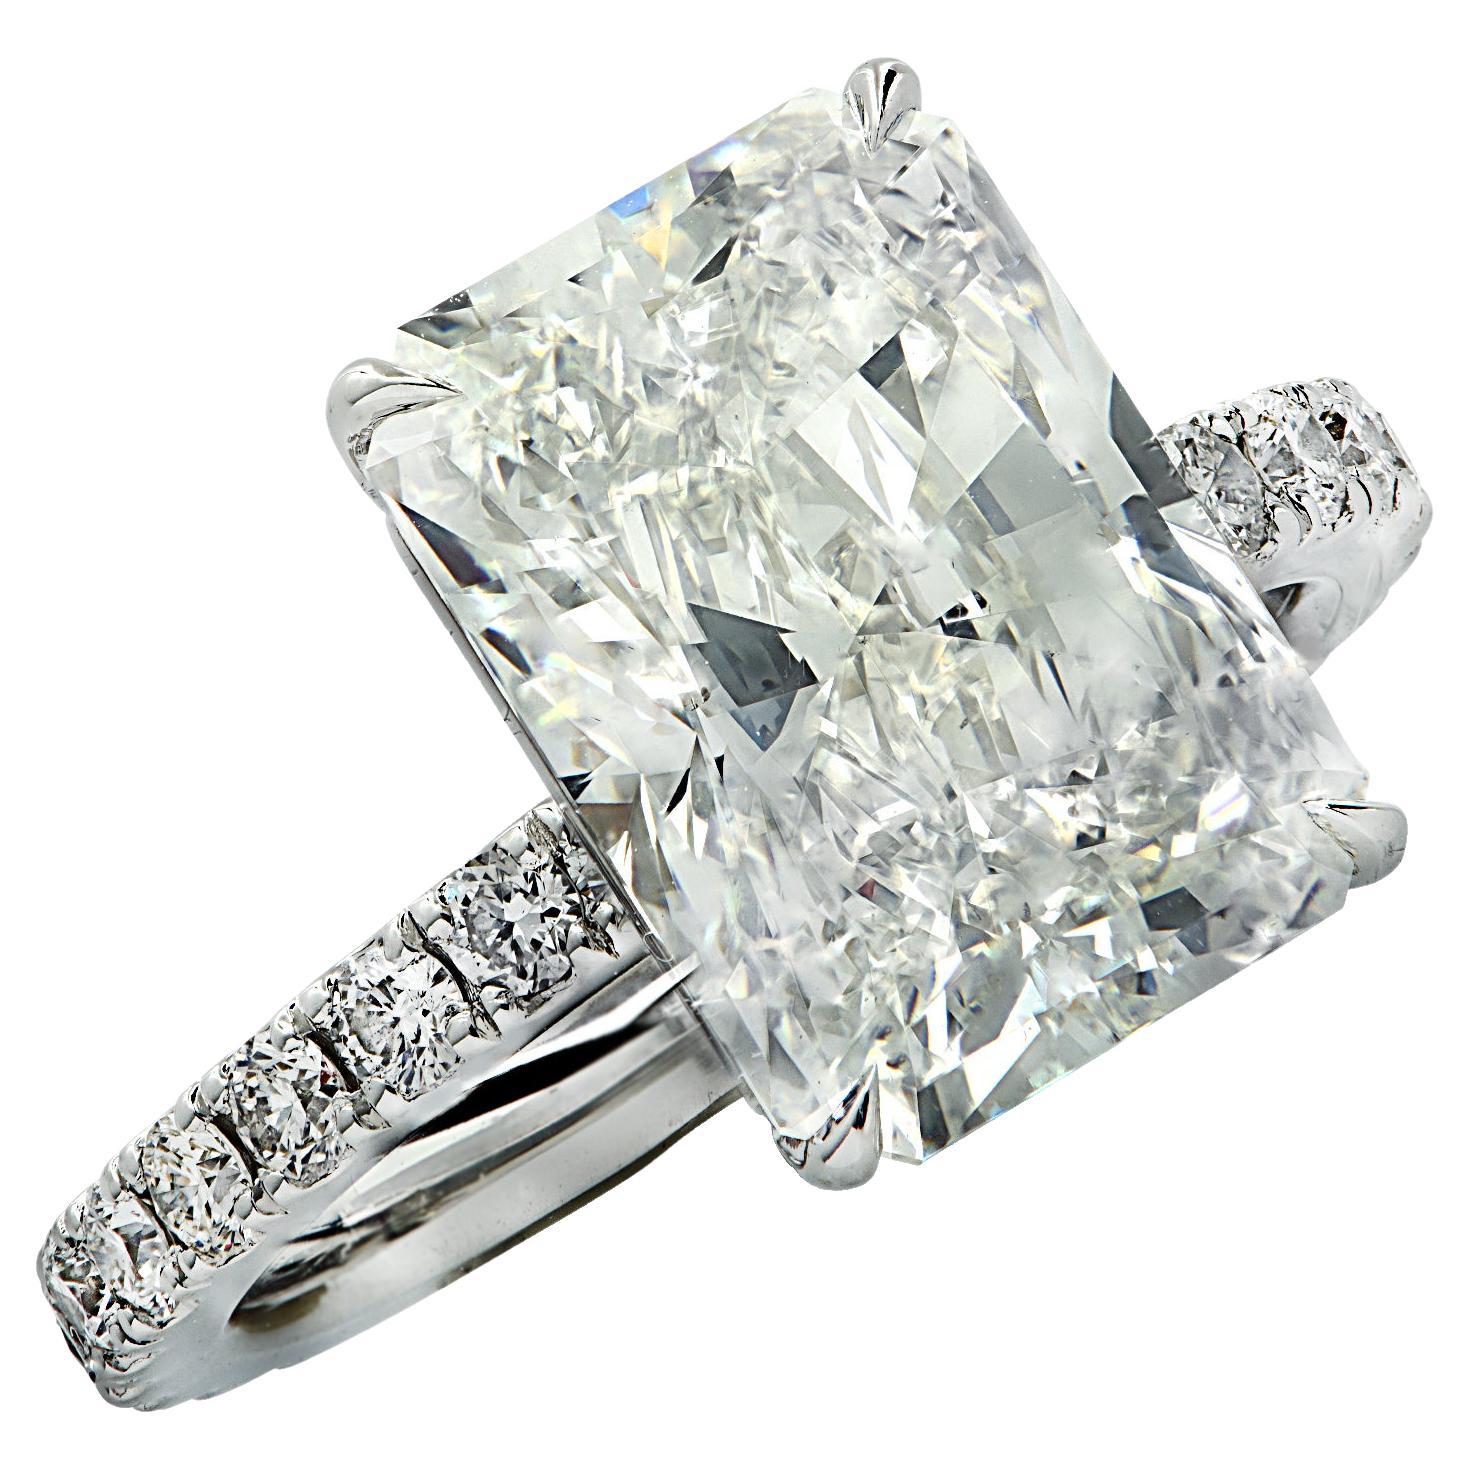 Vivid Diamonds GIA Certified 5.25 Carat Radiant Cut Diamond Engagement Ring For Sale